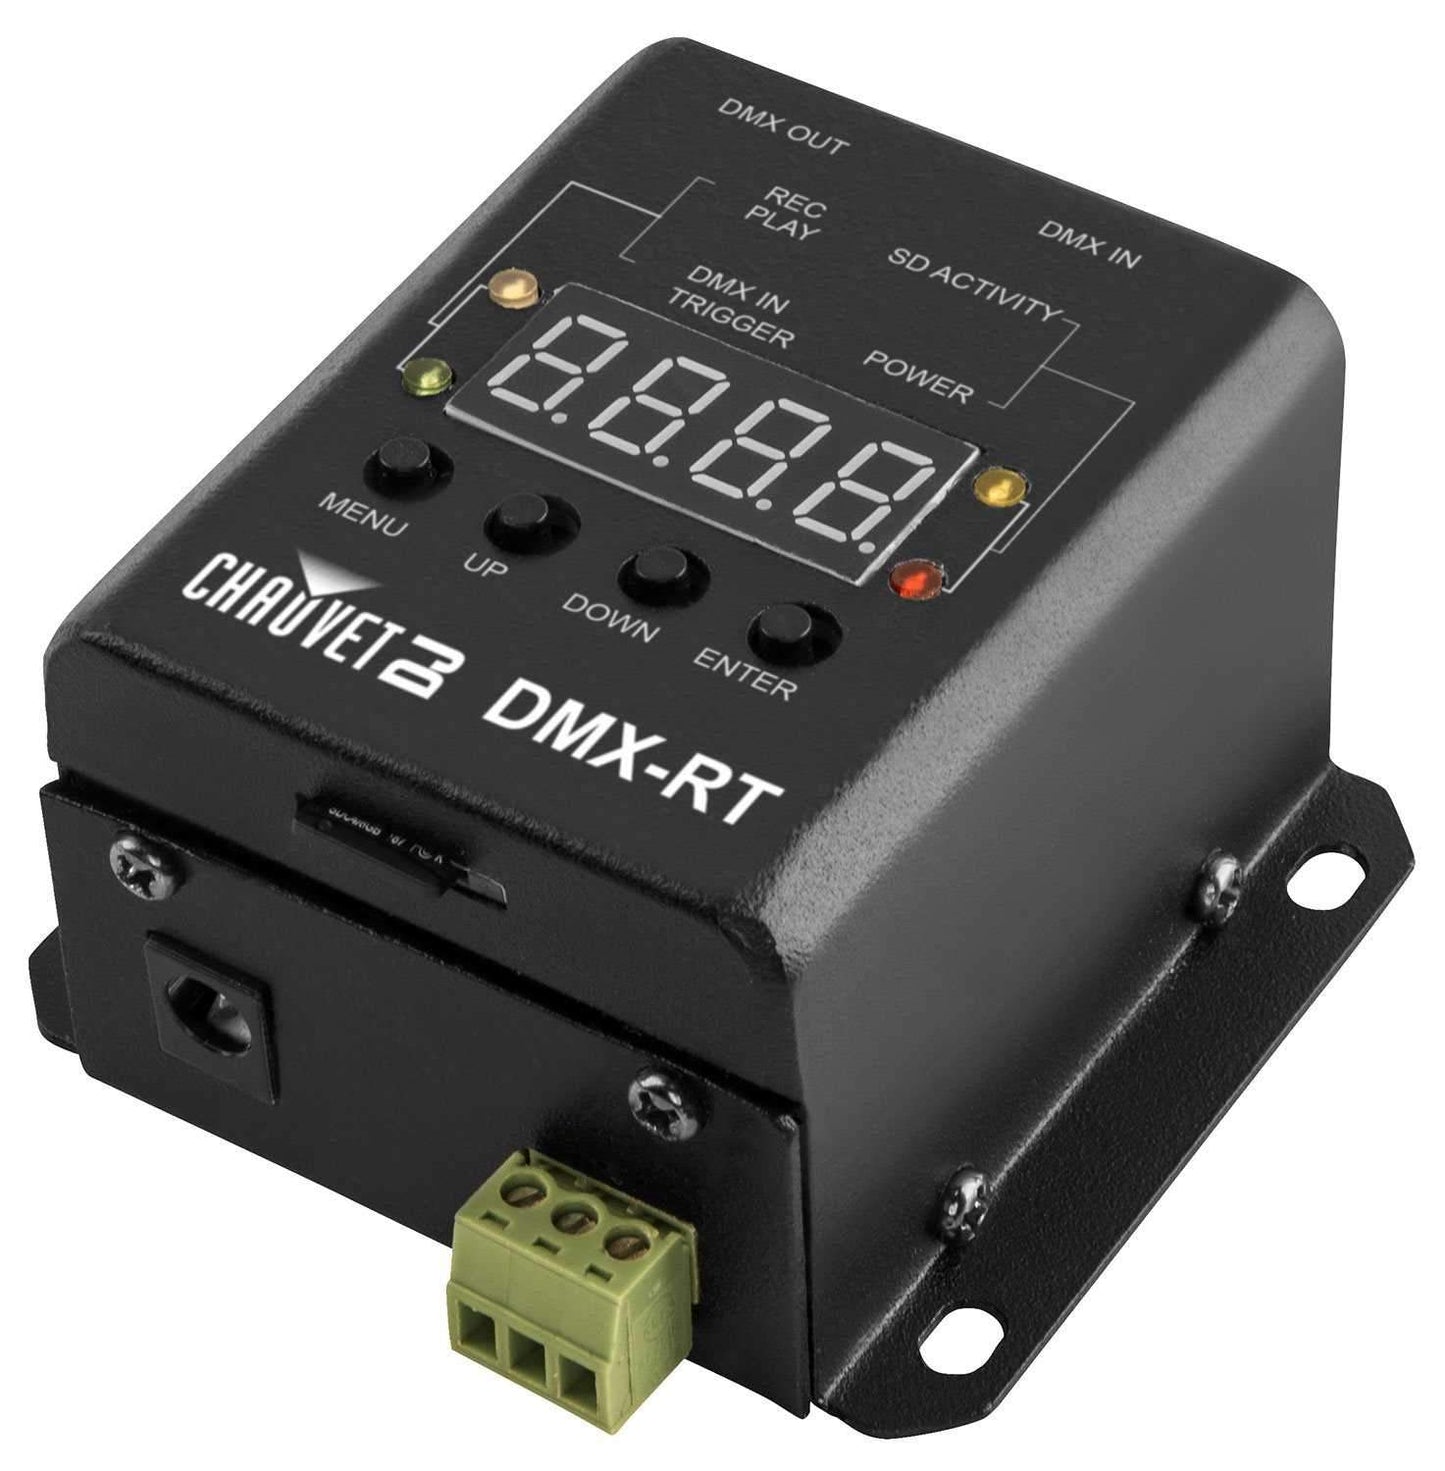 Chauvet DMX-RT DMX Playback Recorder - ProSound and Stage Lighting